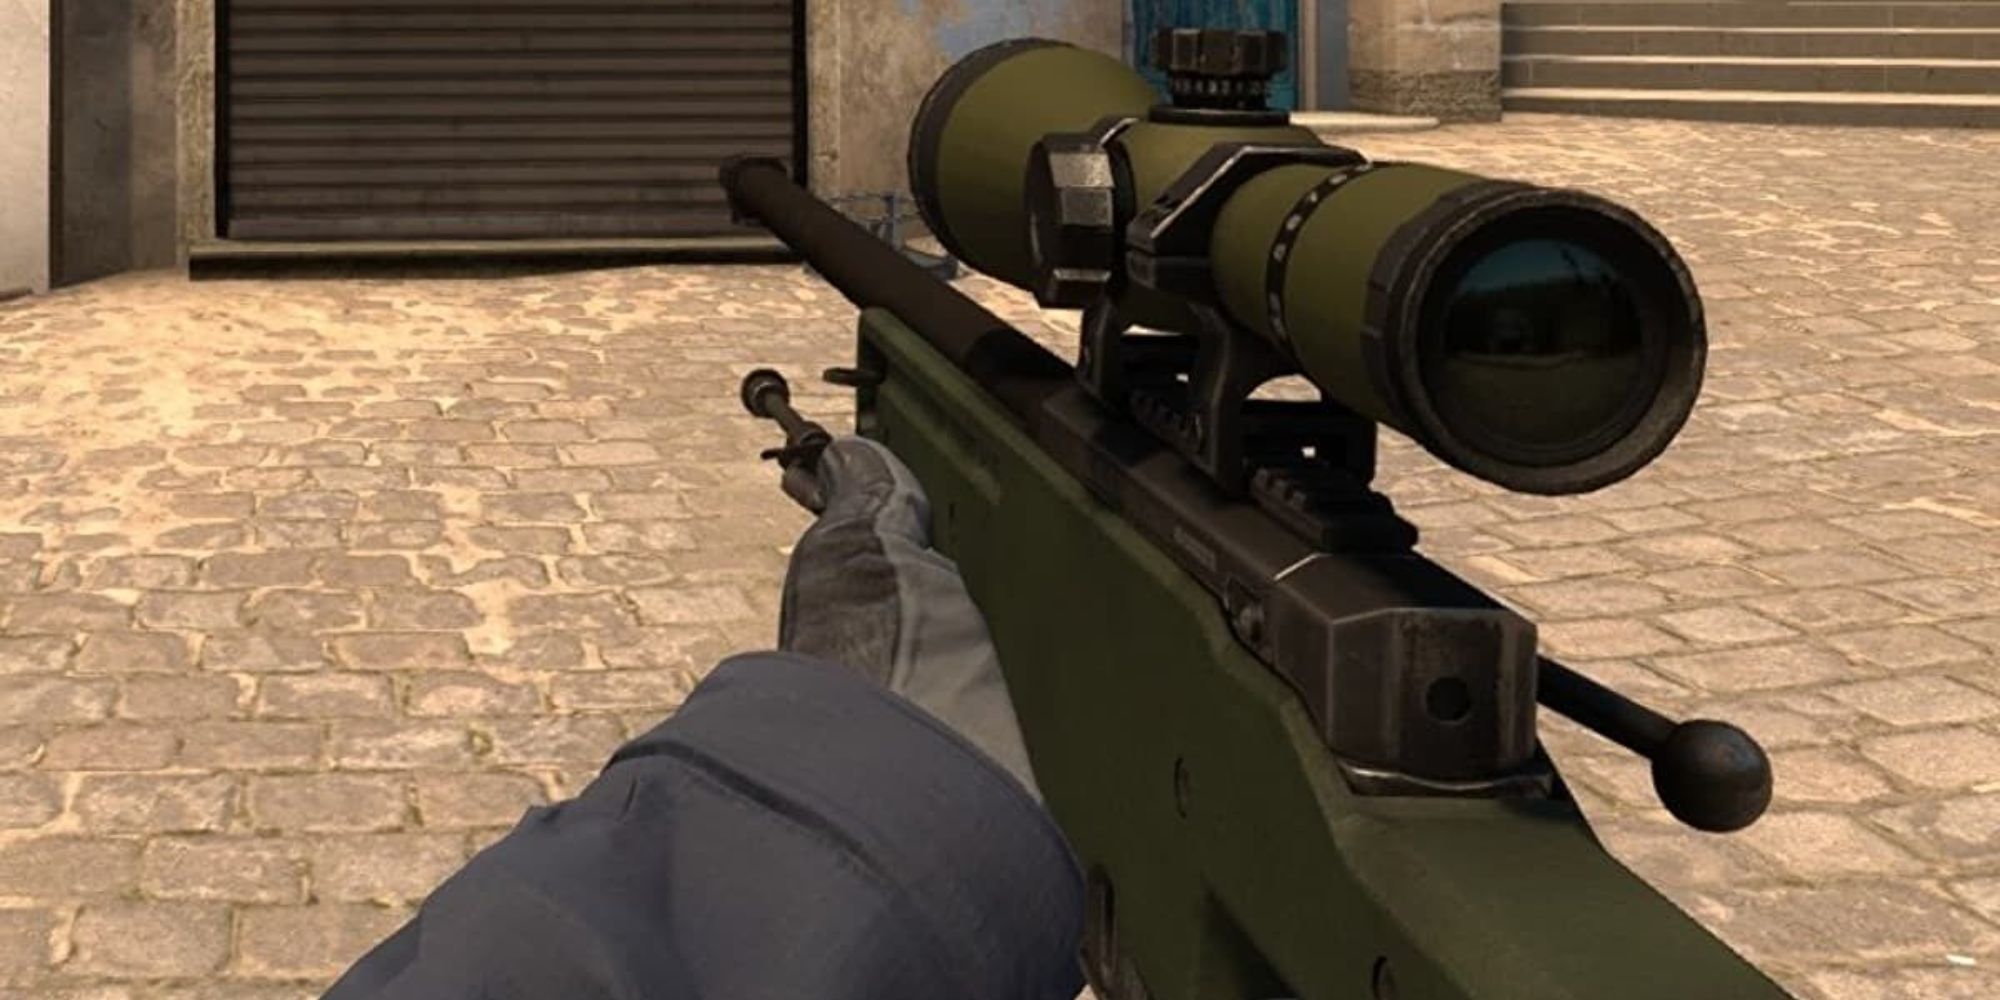 Screenshot of Valve csgo fps sniper rifle in game